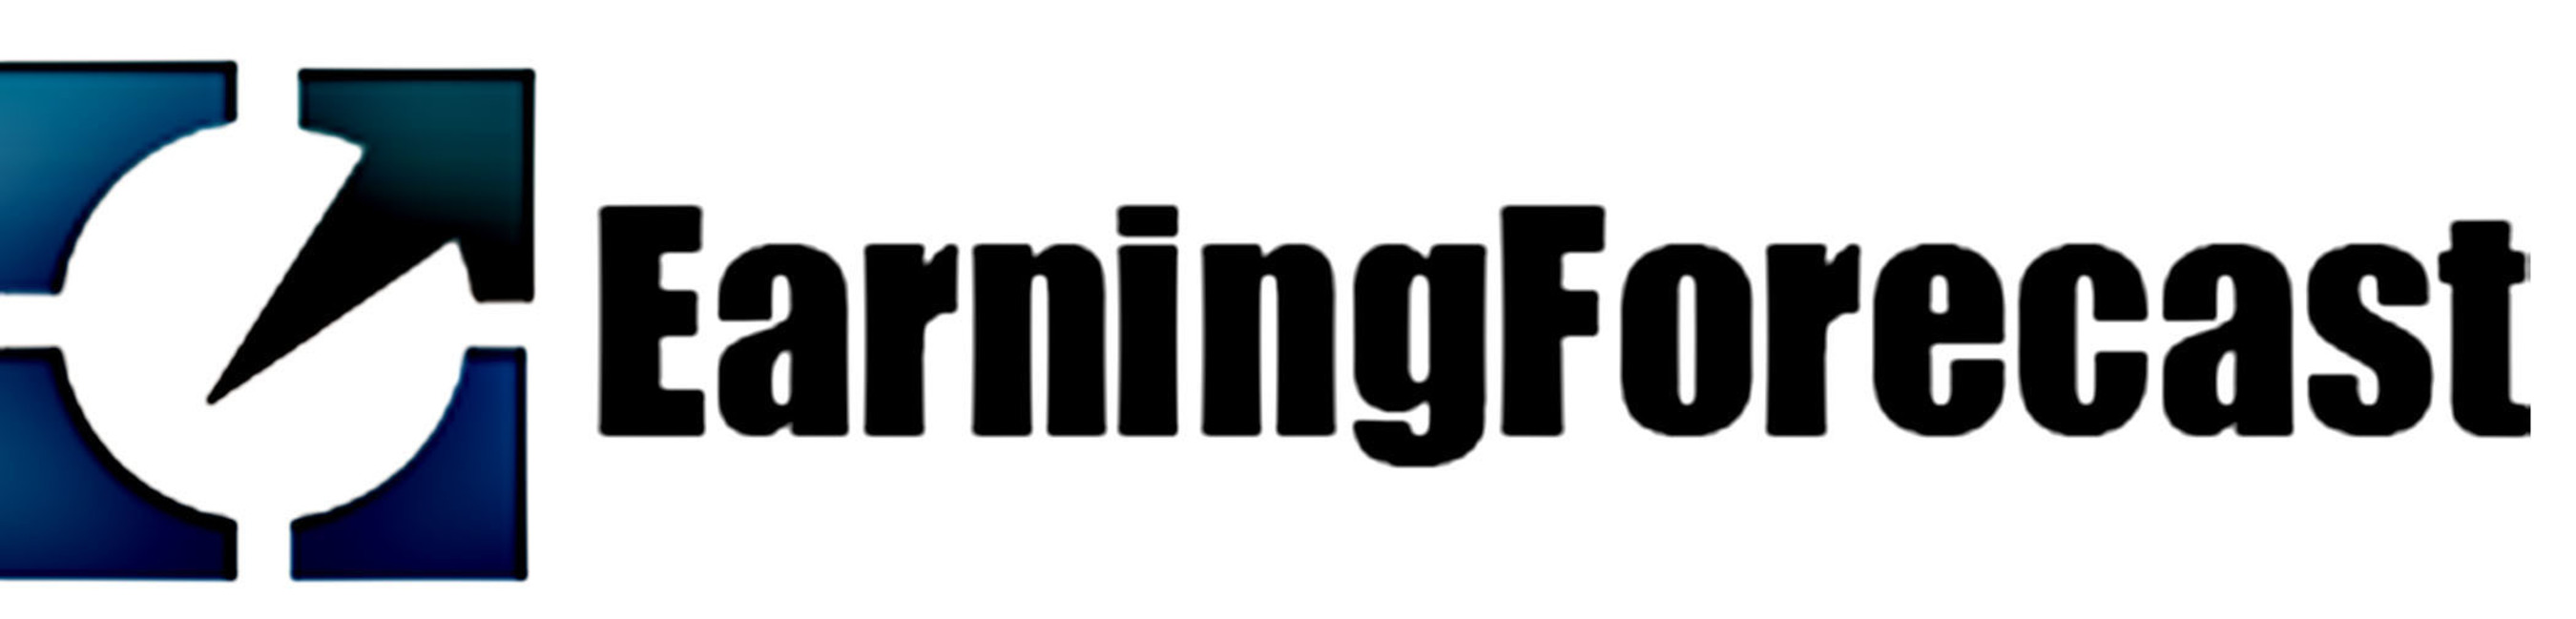 EarningForecast.com logo.